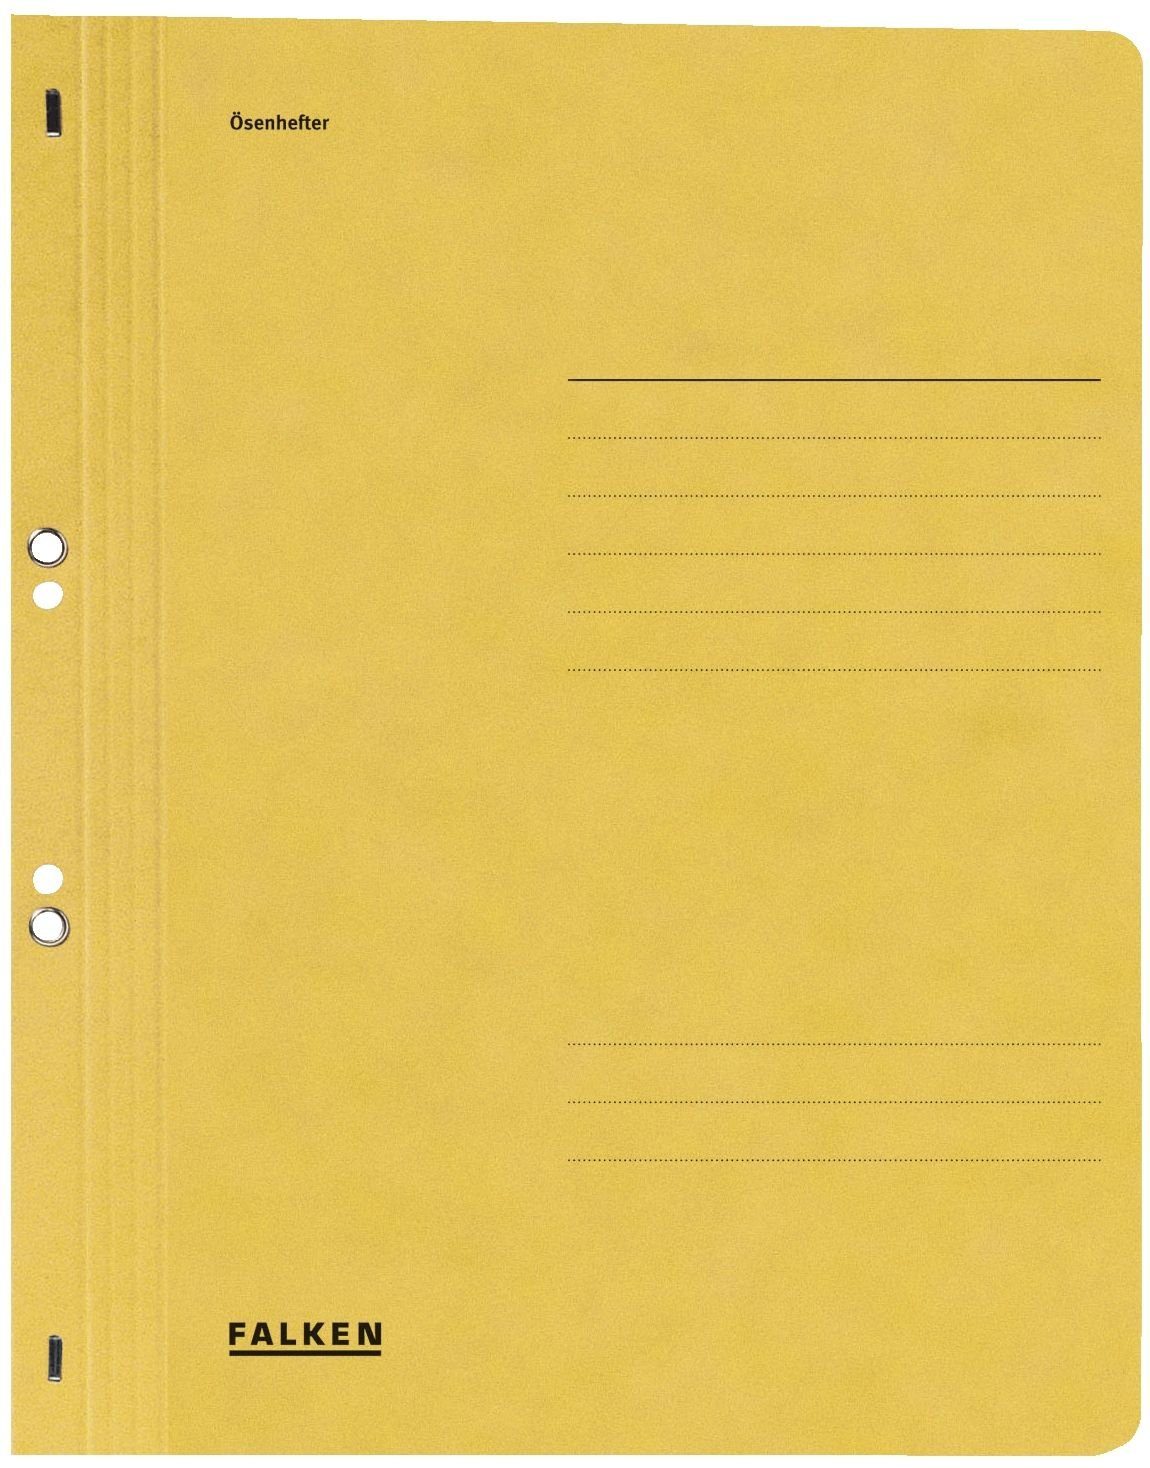 Falken Hefter Ösenhefter - A4 1/1 Vorderdeckel, gelb, Manilakarton, 250 g/qm